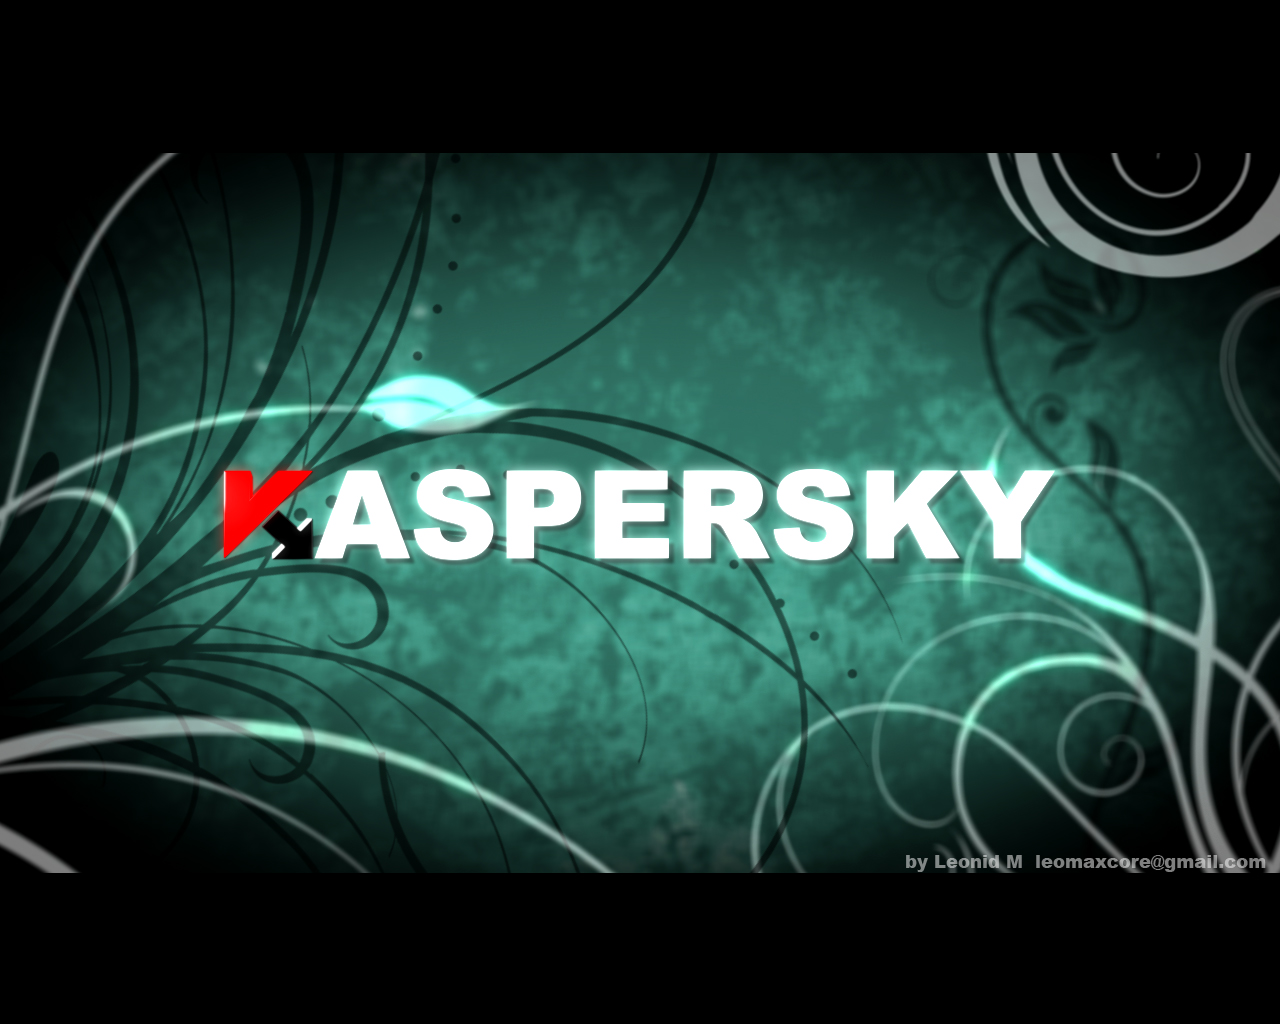 Kaspersky antivirus 6.0 for windows workstations crack